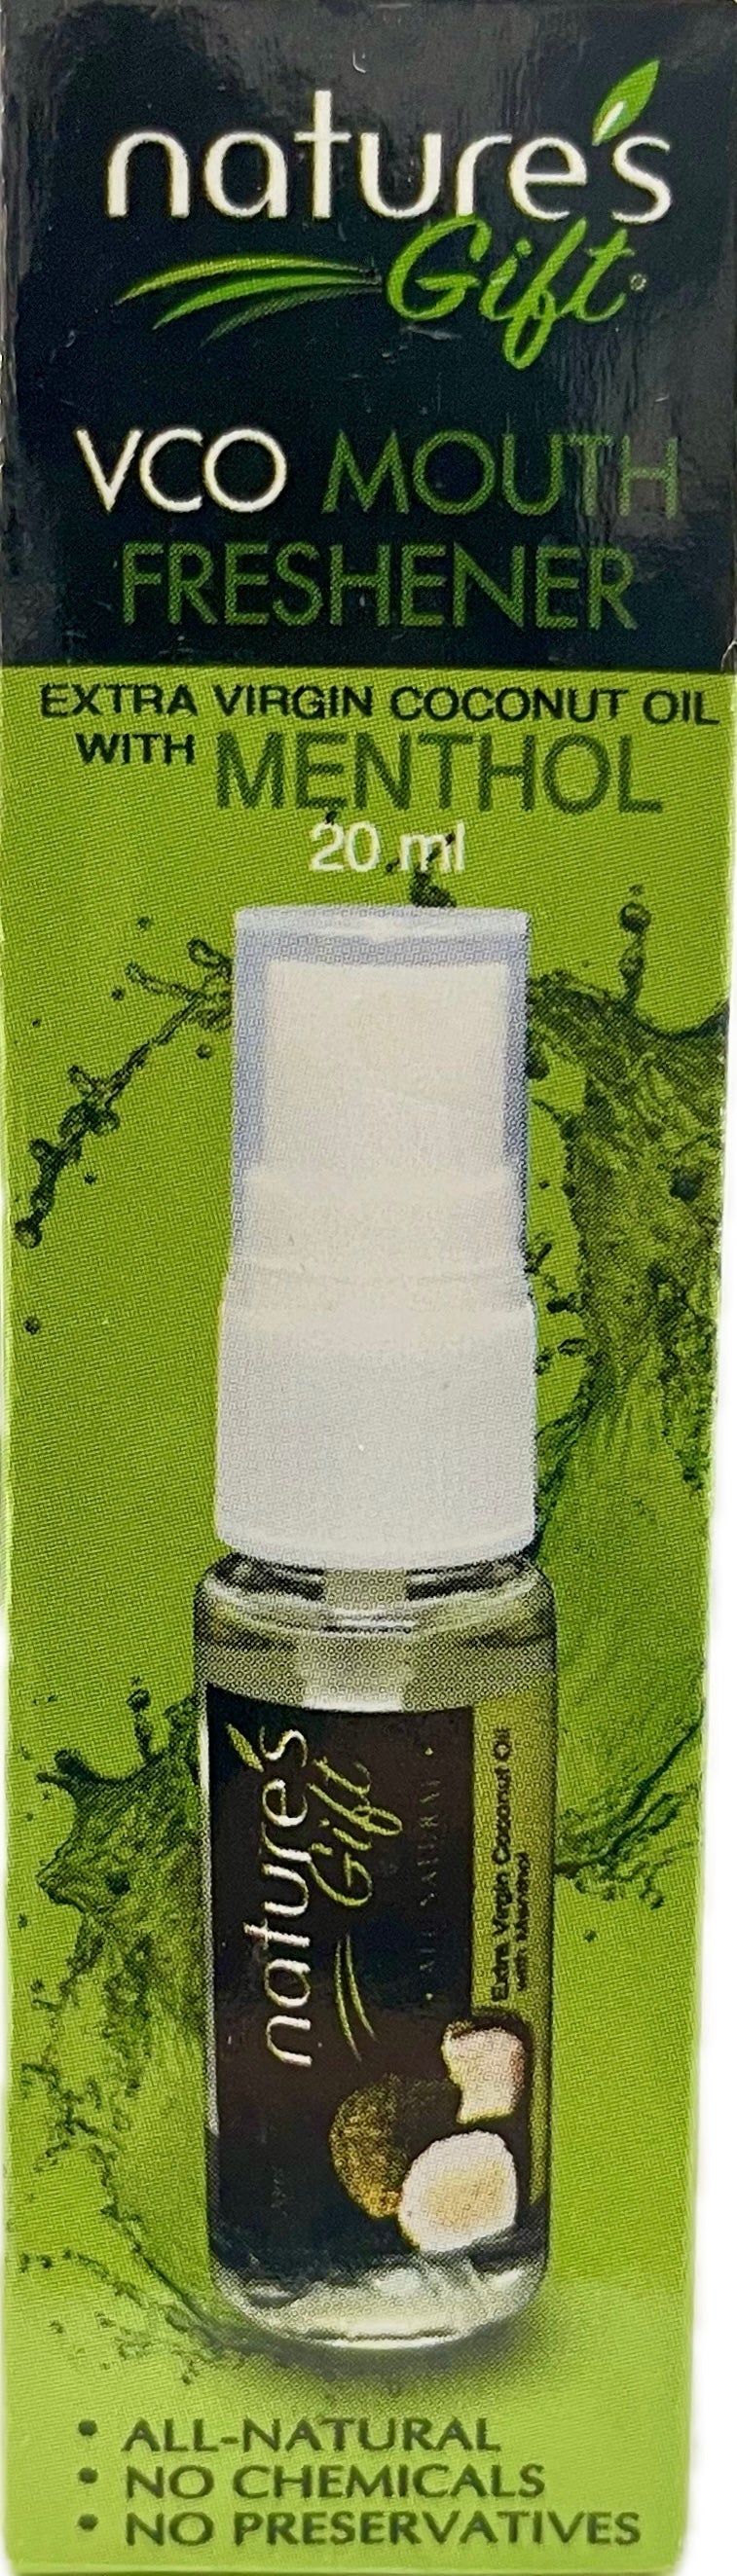 Nature's Gift VCO Mouth Freshener Spray (20mL)